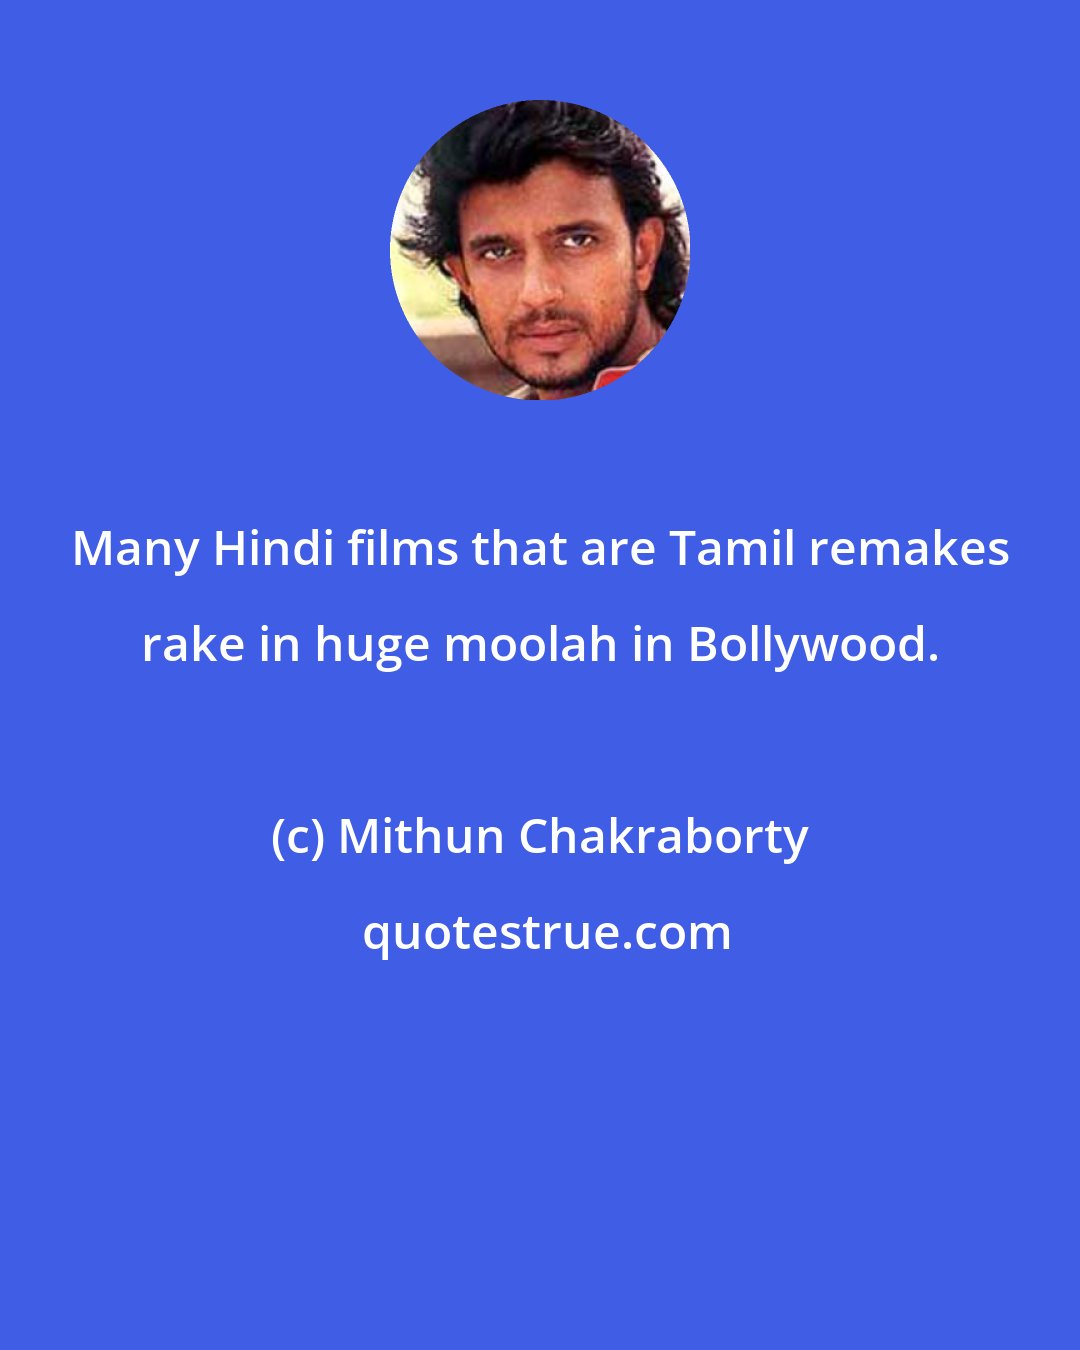 Mithun Chakraborty: Many Hindi films that are Tamil remakes rake in huge moolah in Bollywood.